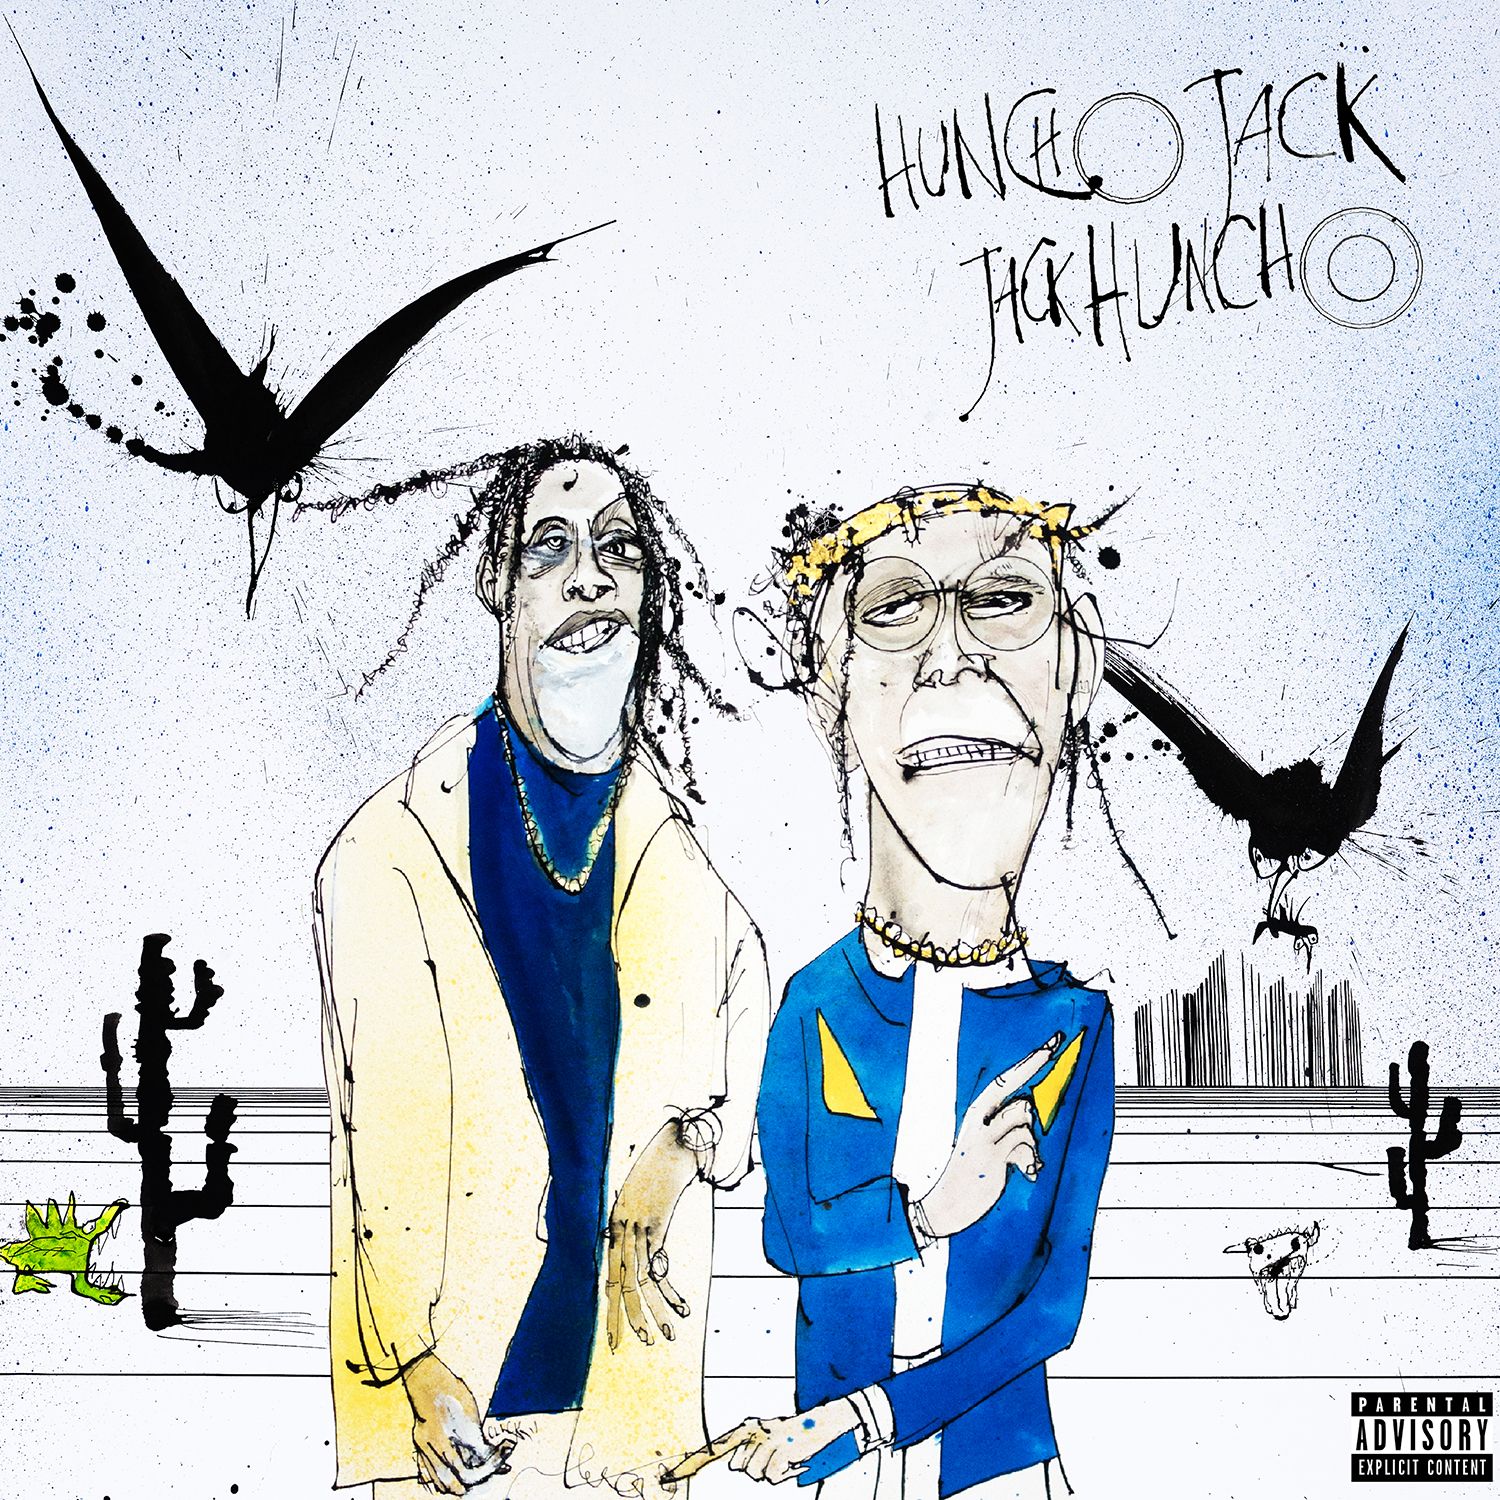 Huncho Jack, Jack Huncho album cover by Travis Scott